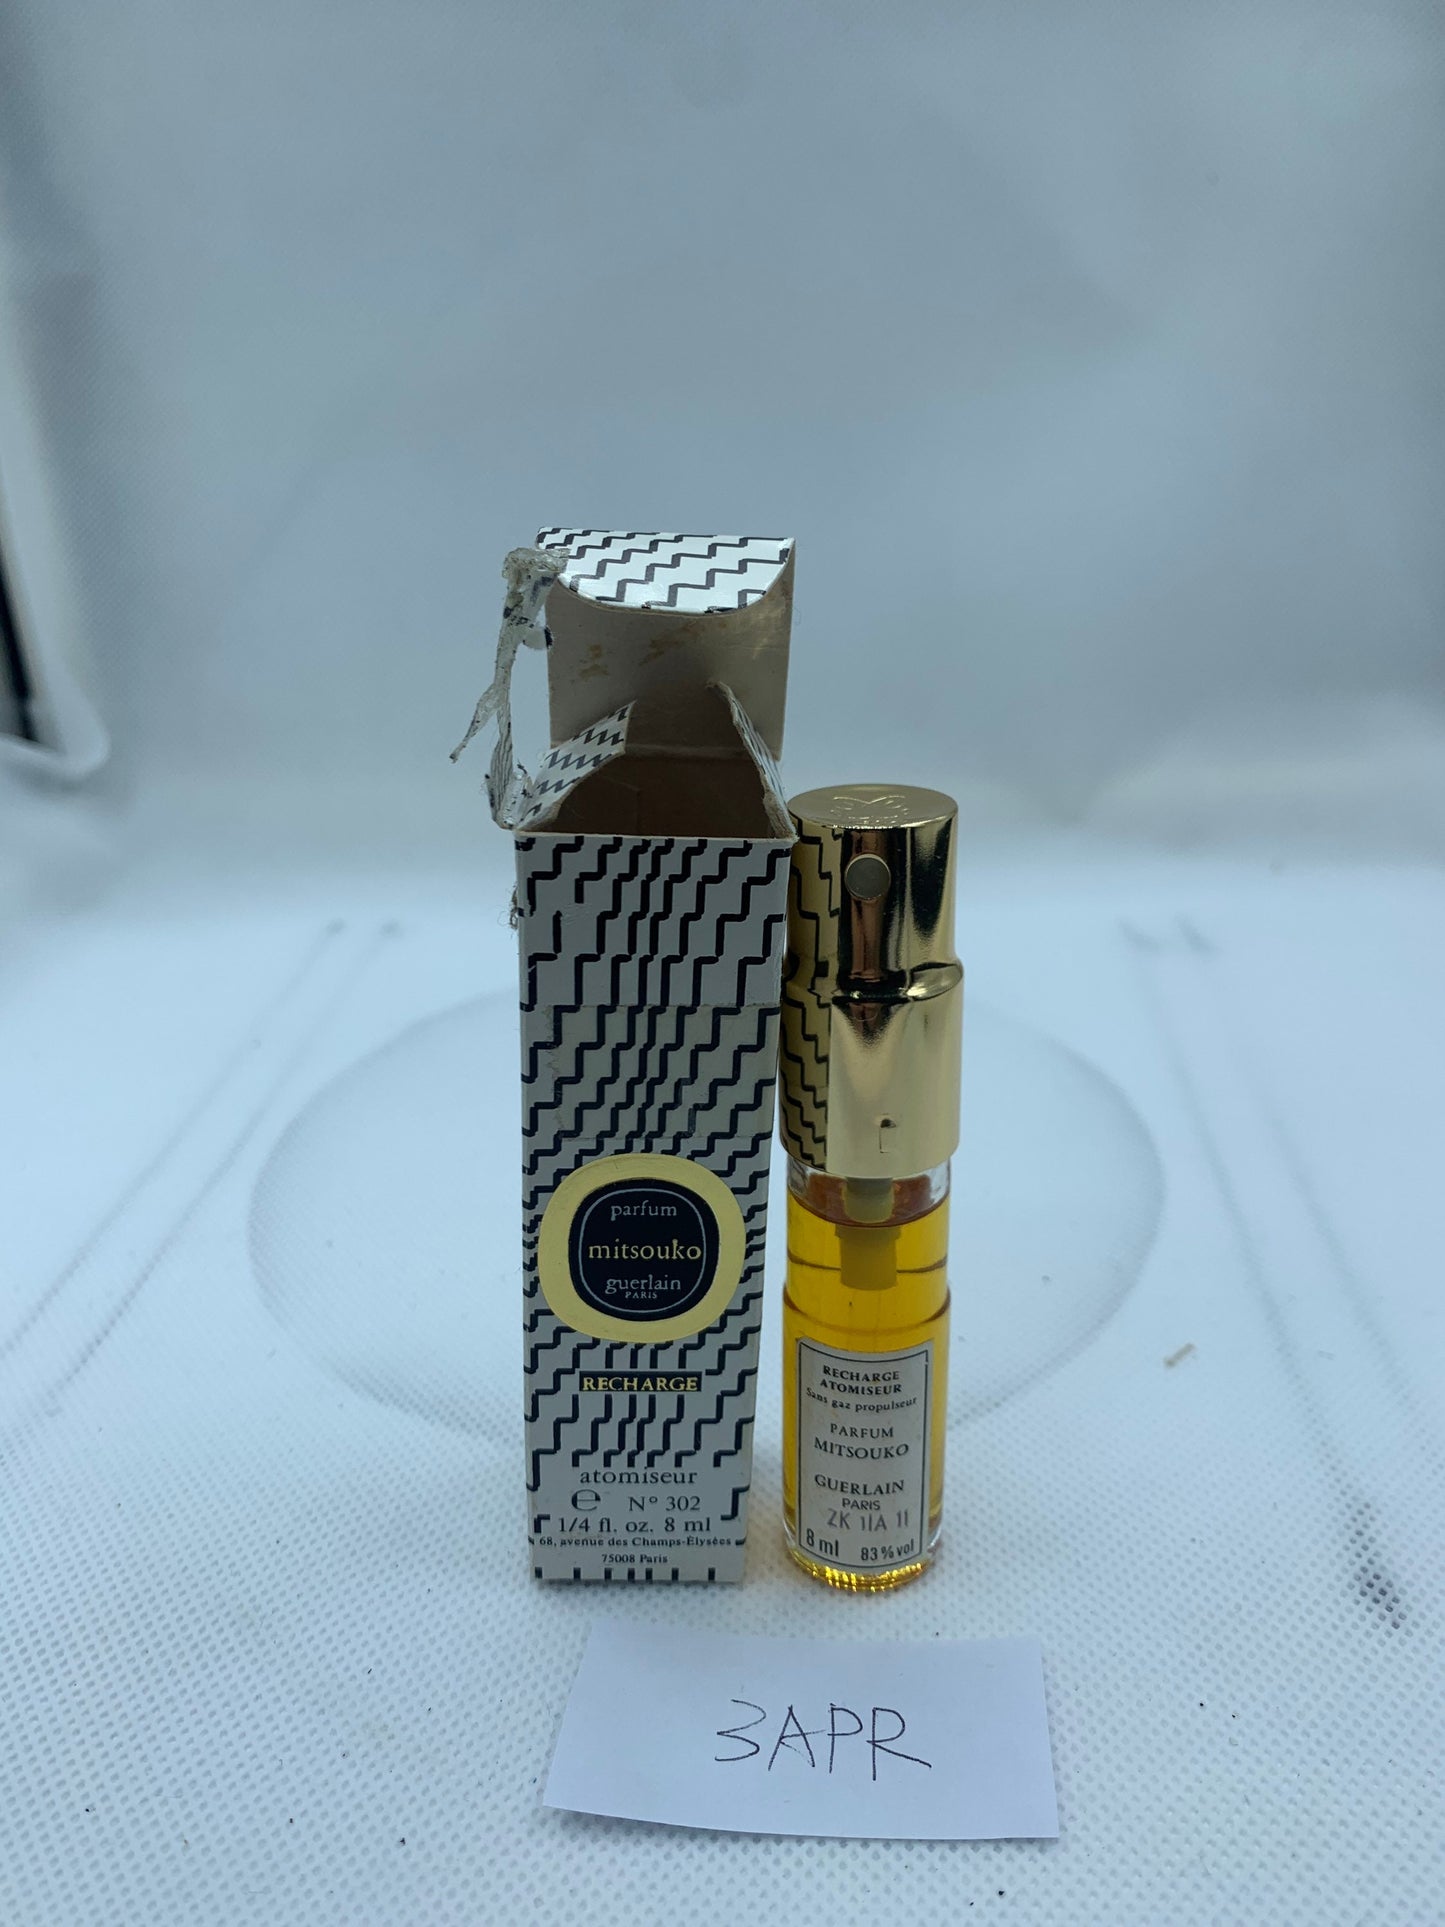 Guerlian mitsouko parfum perfume 8ml refills bottle